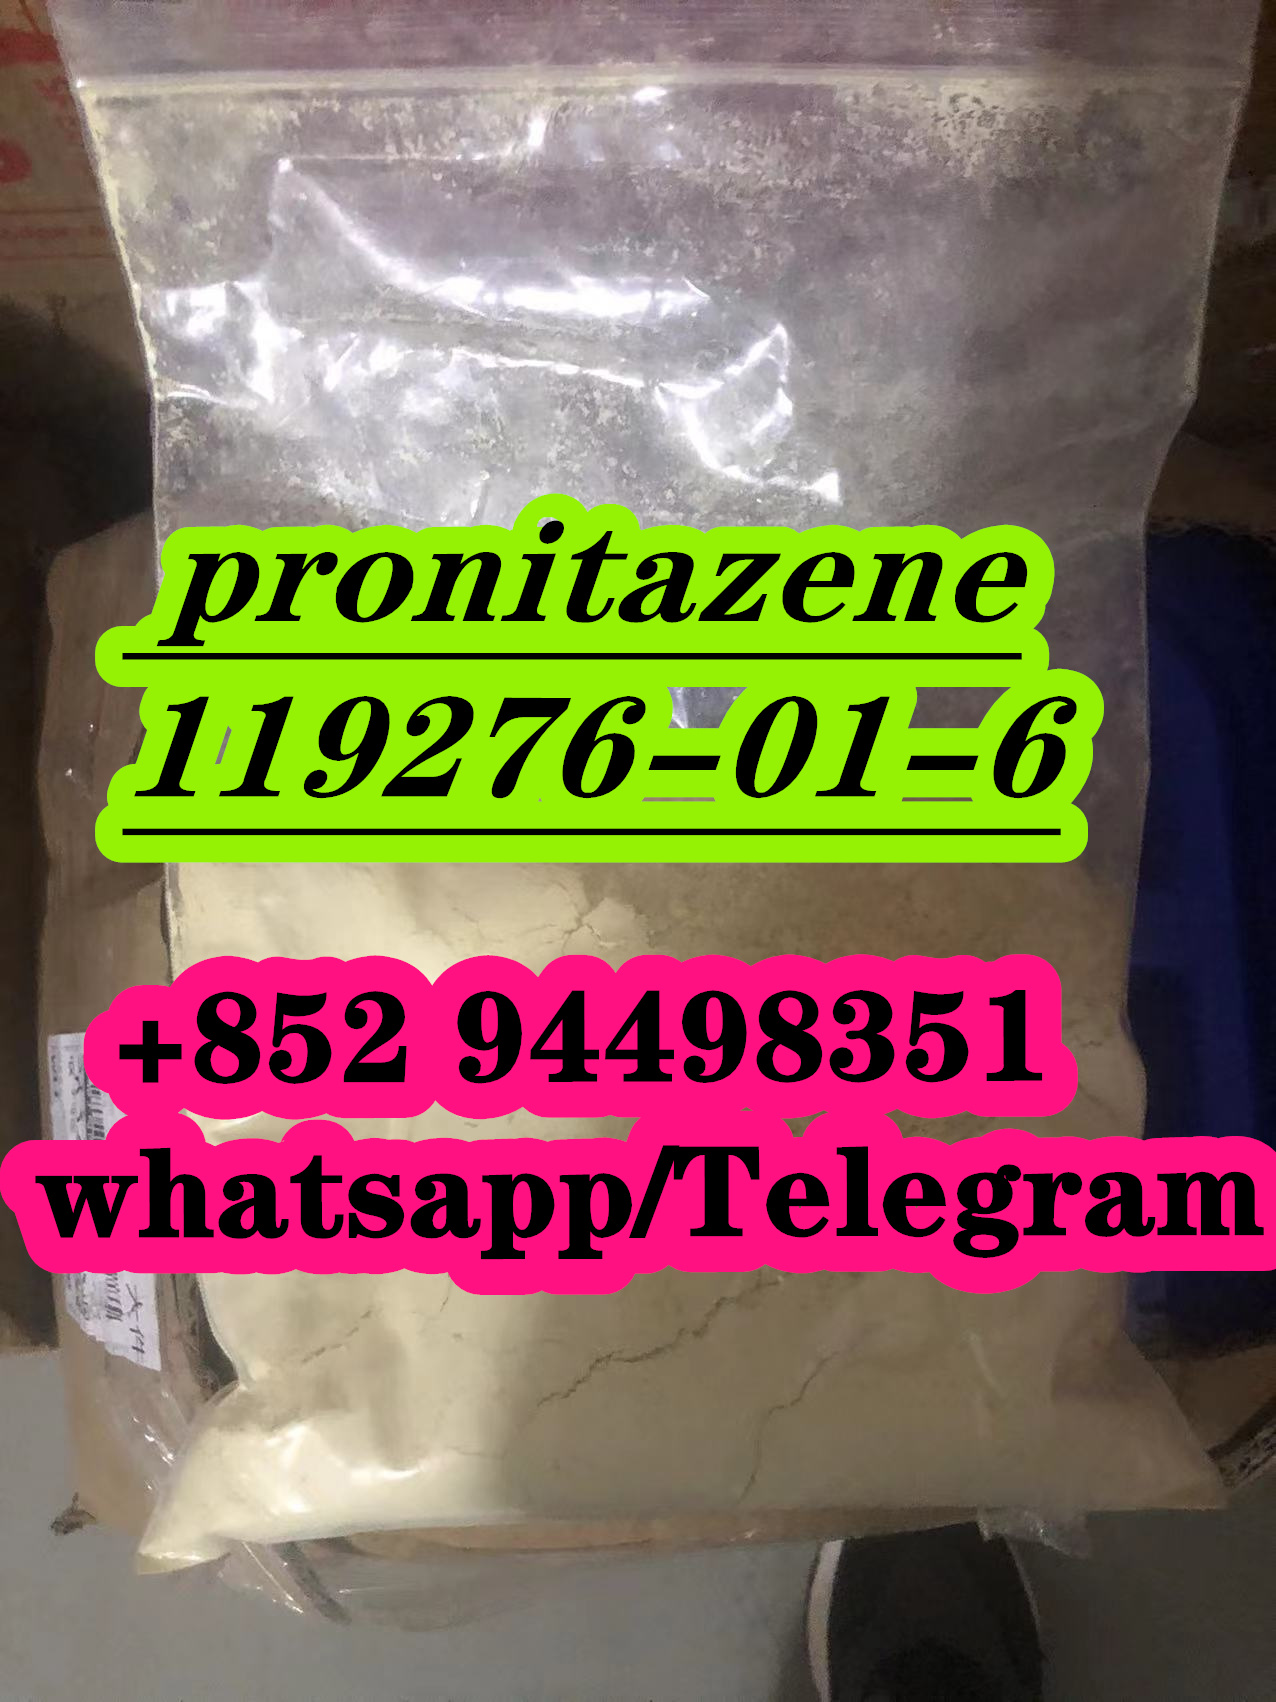 Protonitazene CAS 119276-01-6,nev,Cars,Free Classifieds,Post Free Ads,77traders.com